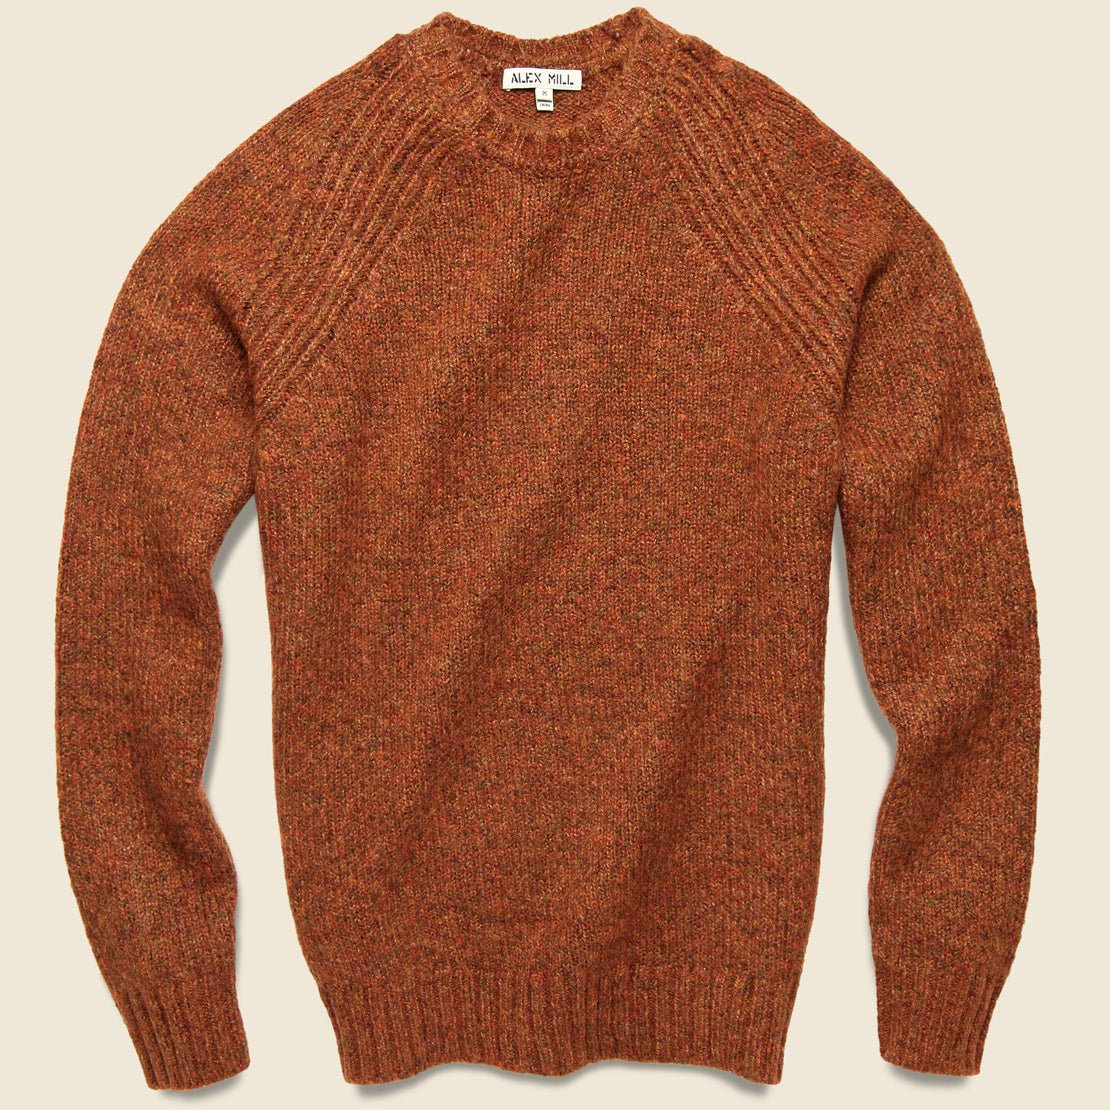 Alex Mill Fuzzy Raglan Crewneck Sweater - Toffee